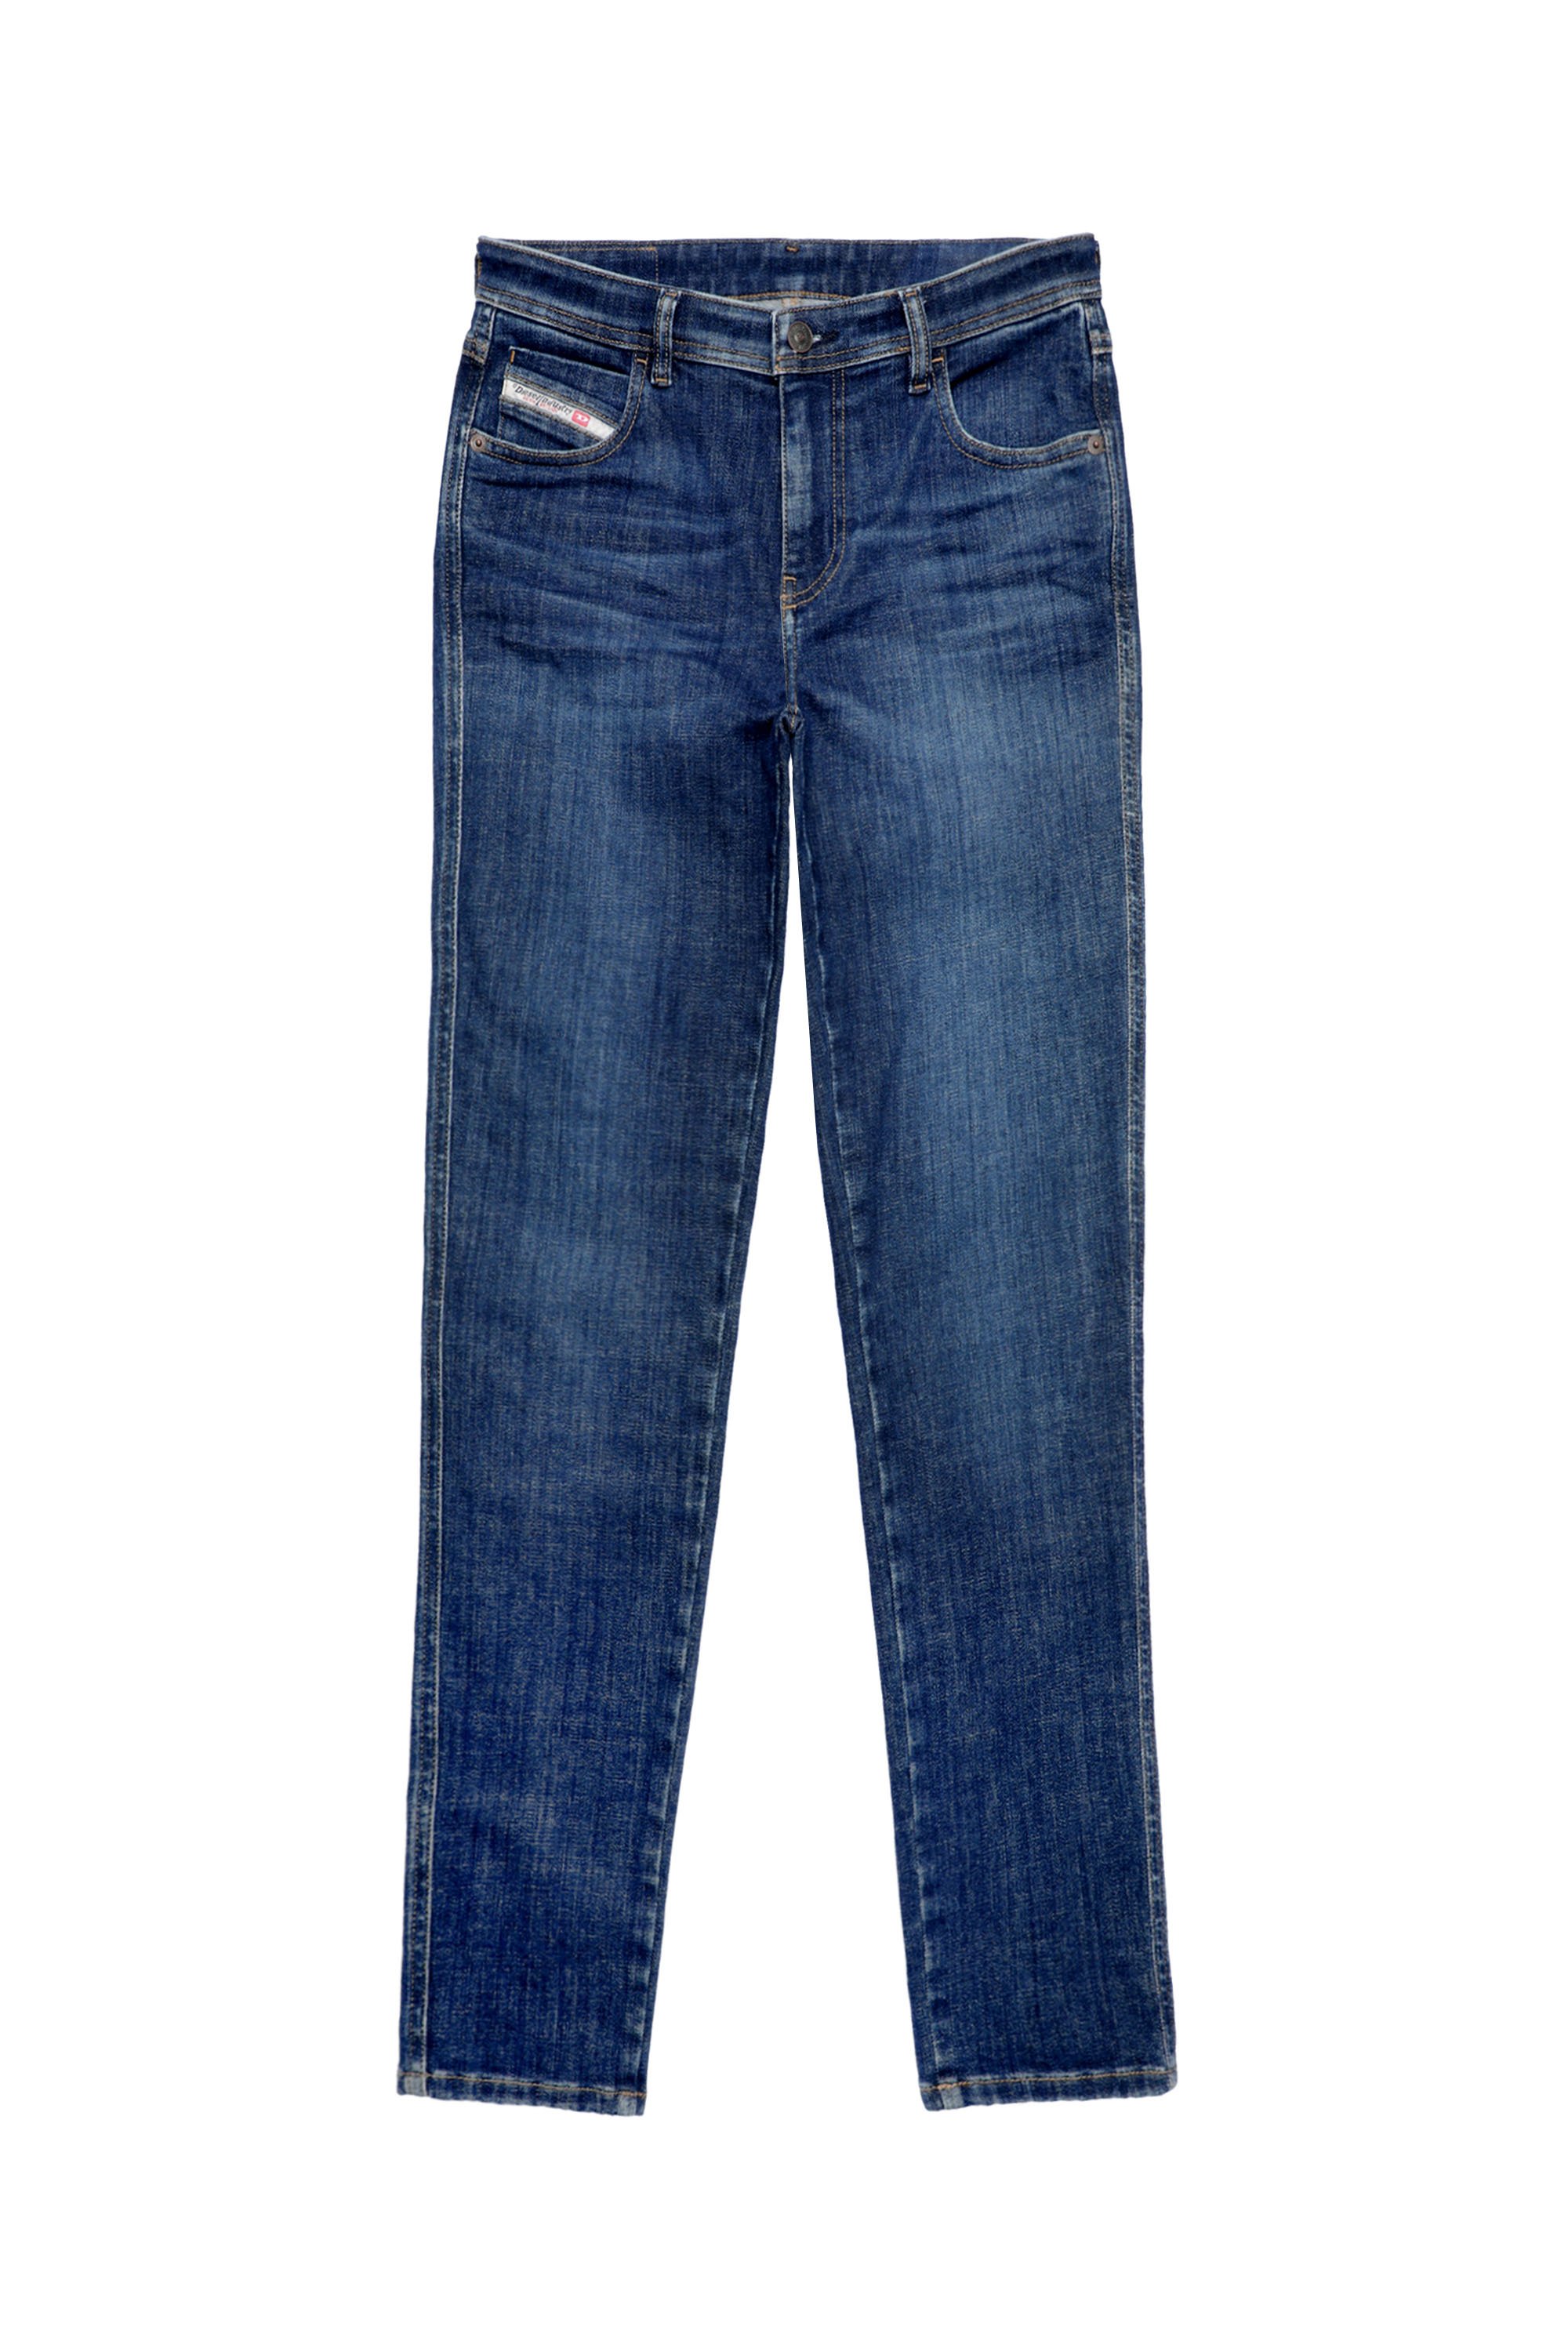 Skinny Jeans 2015 Babhila 09C58, Bleu Foncé - Jeans